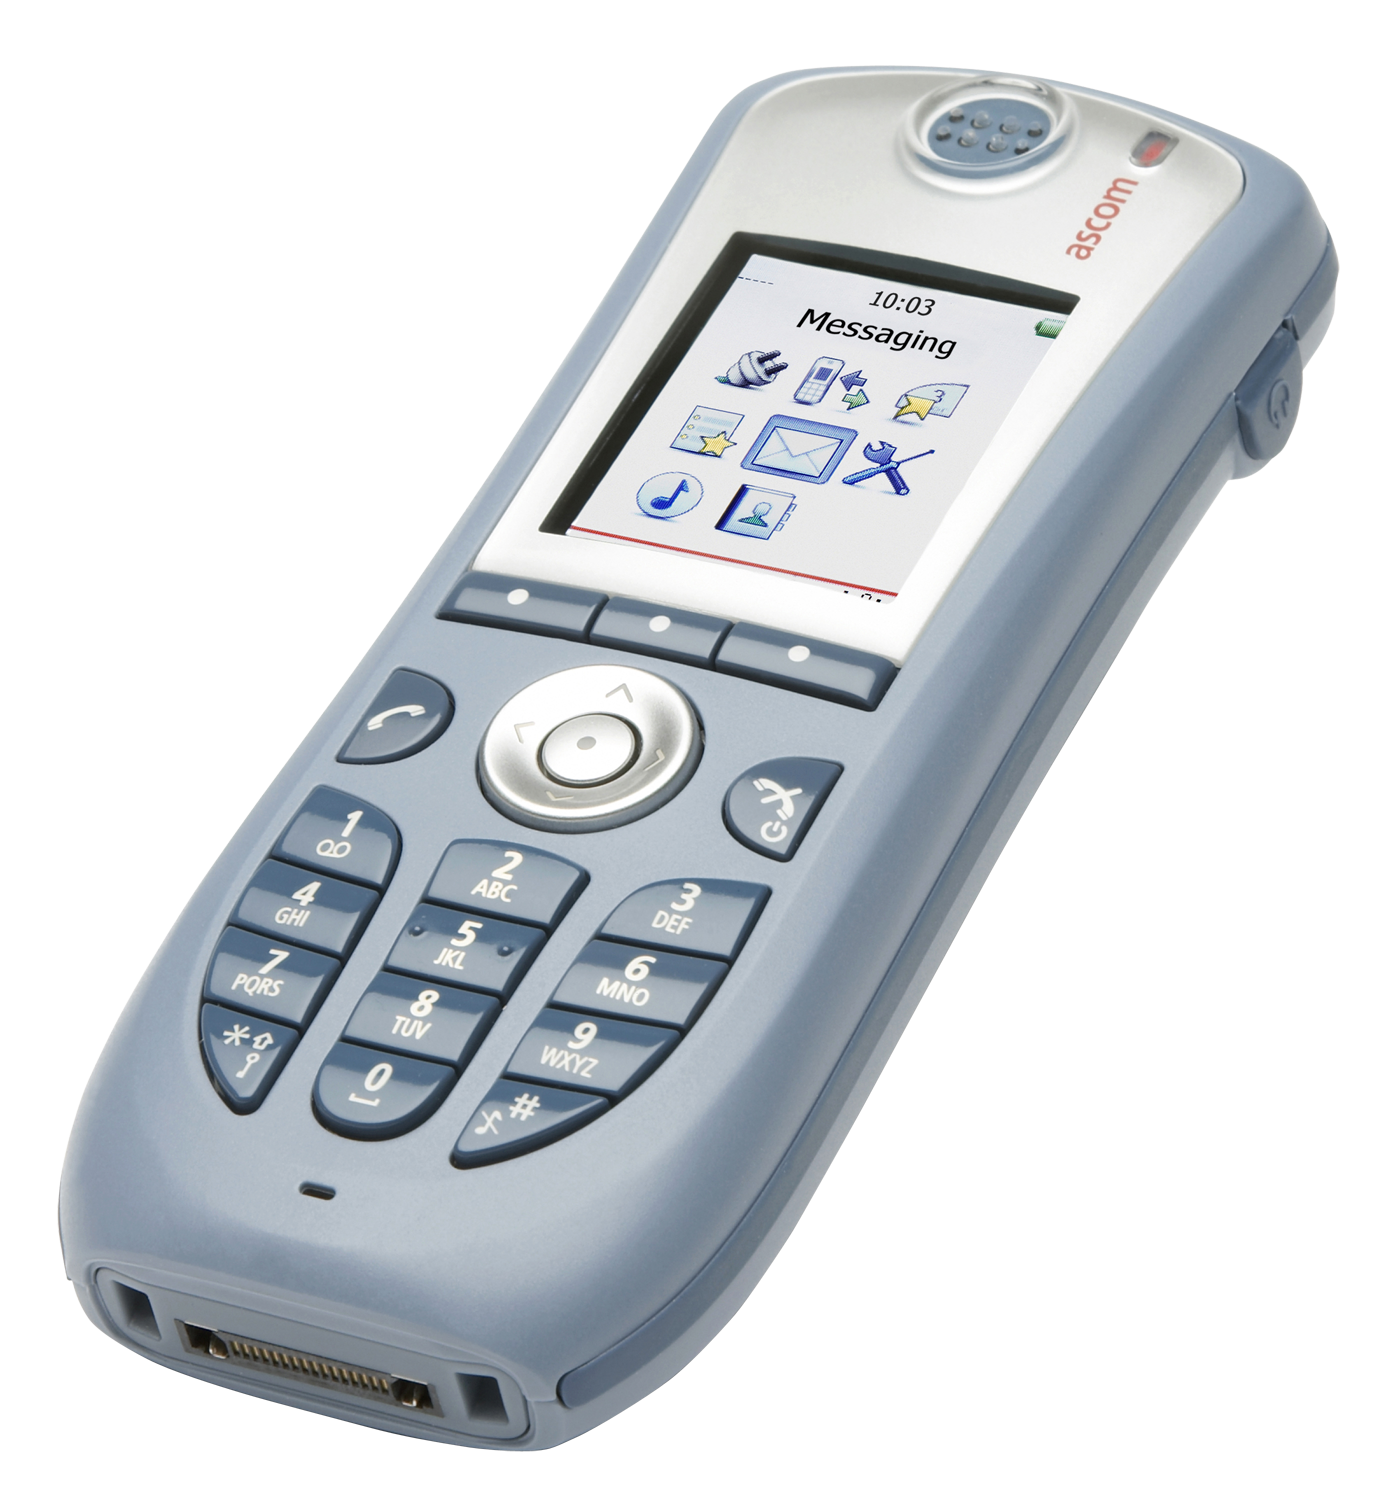 Ascom i62 Messenger Voice over WiFi handset